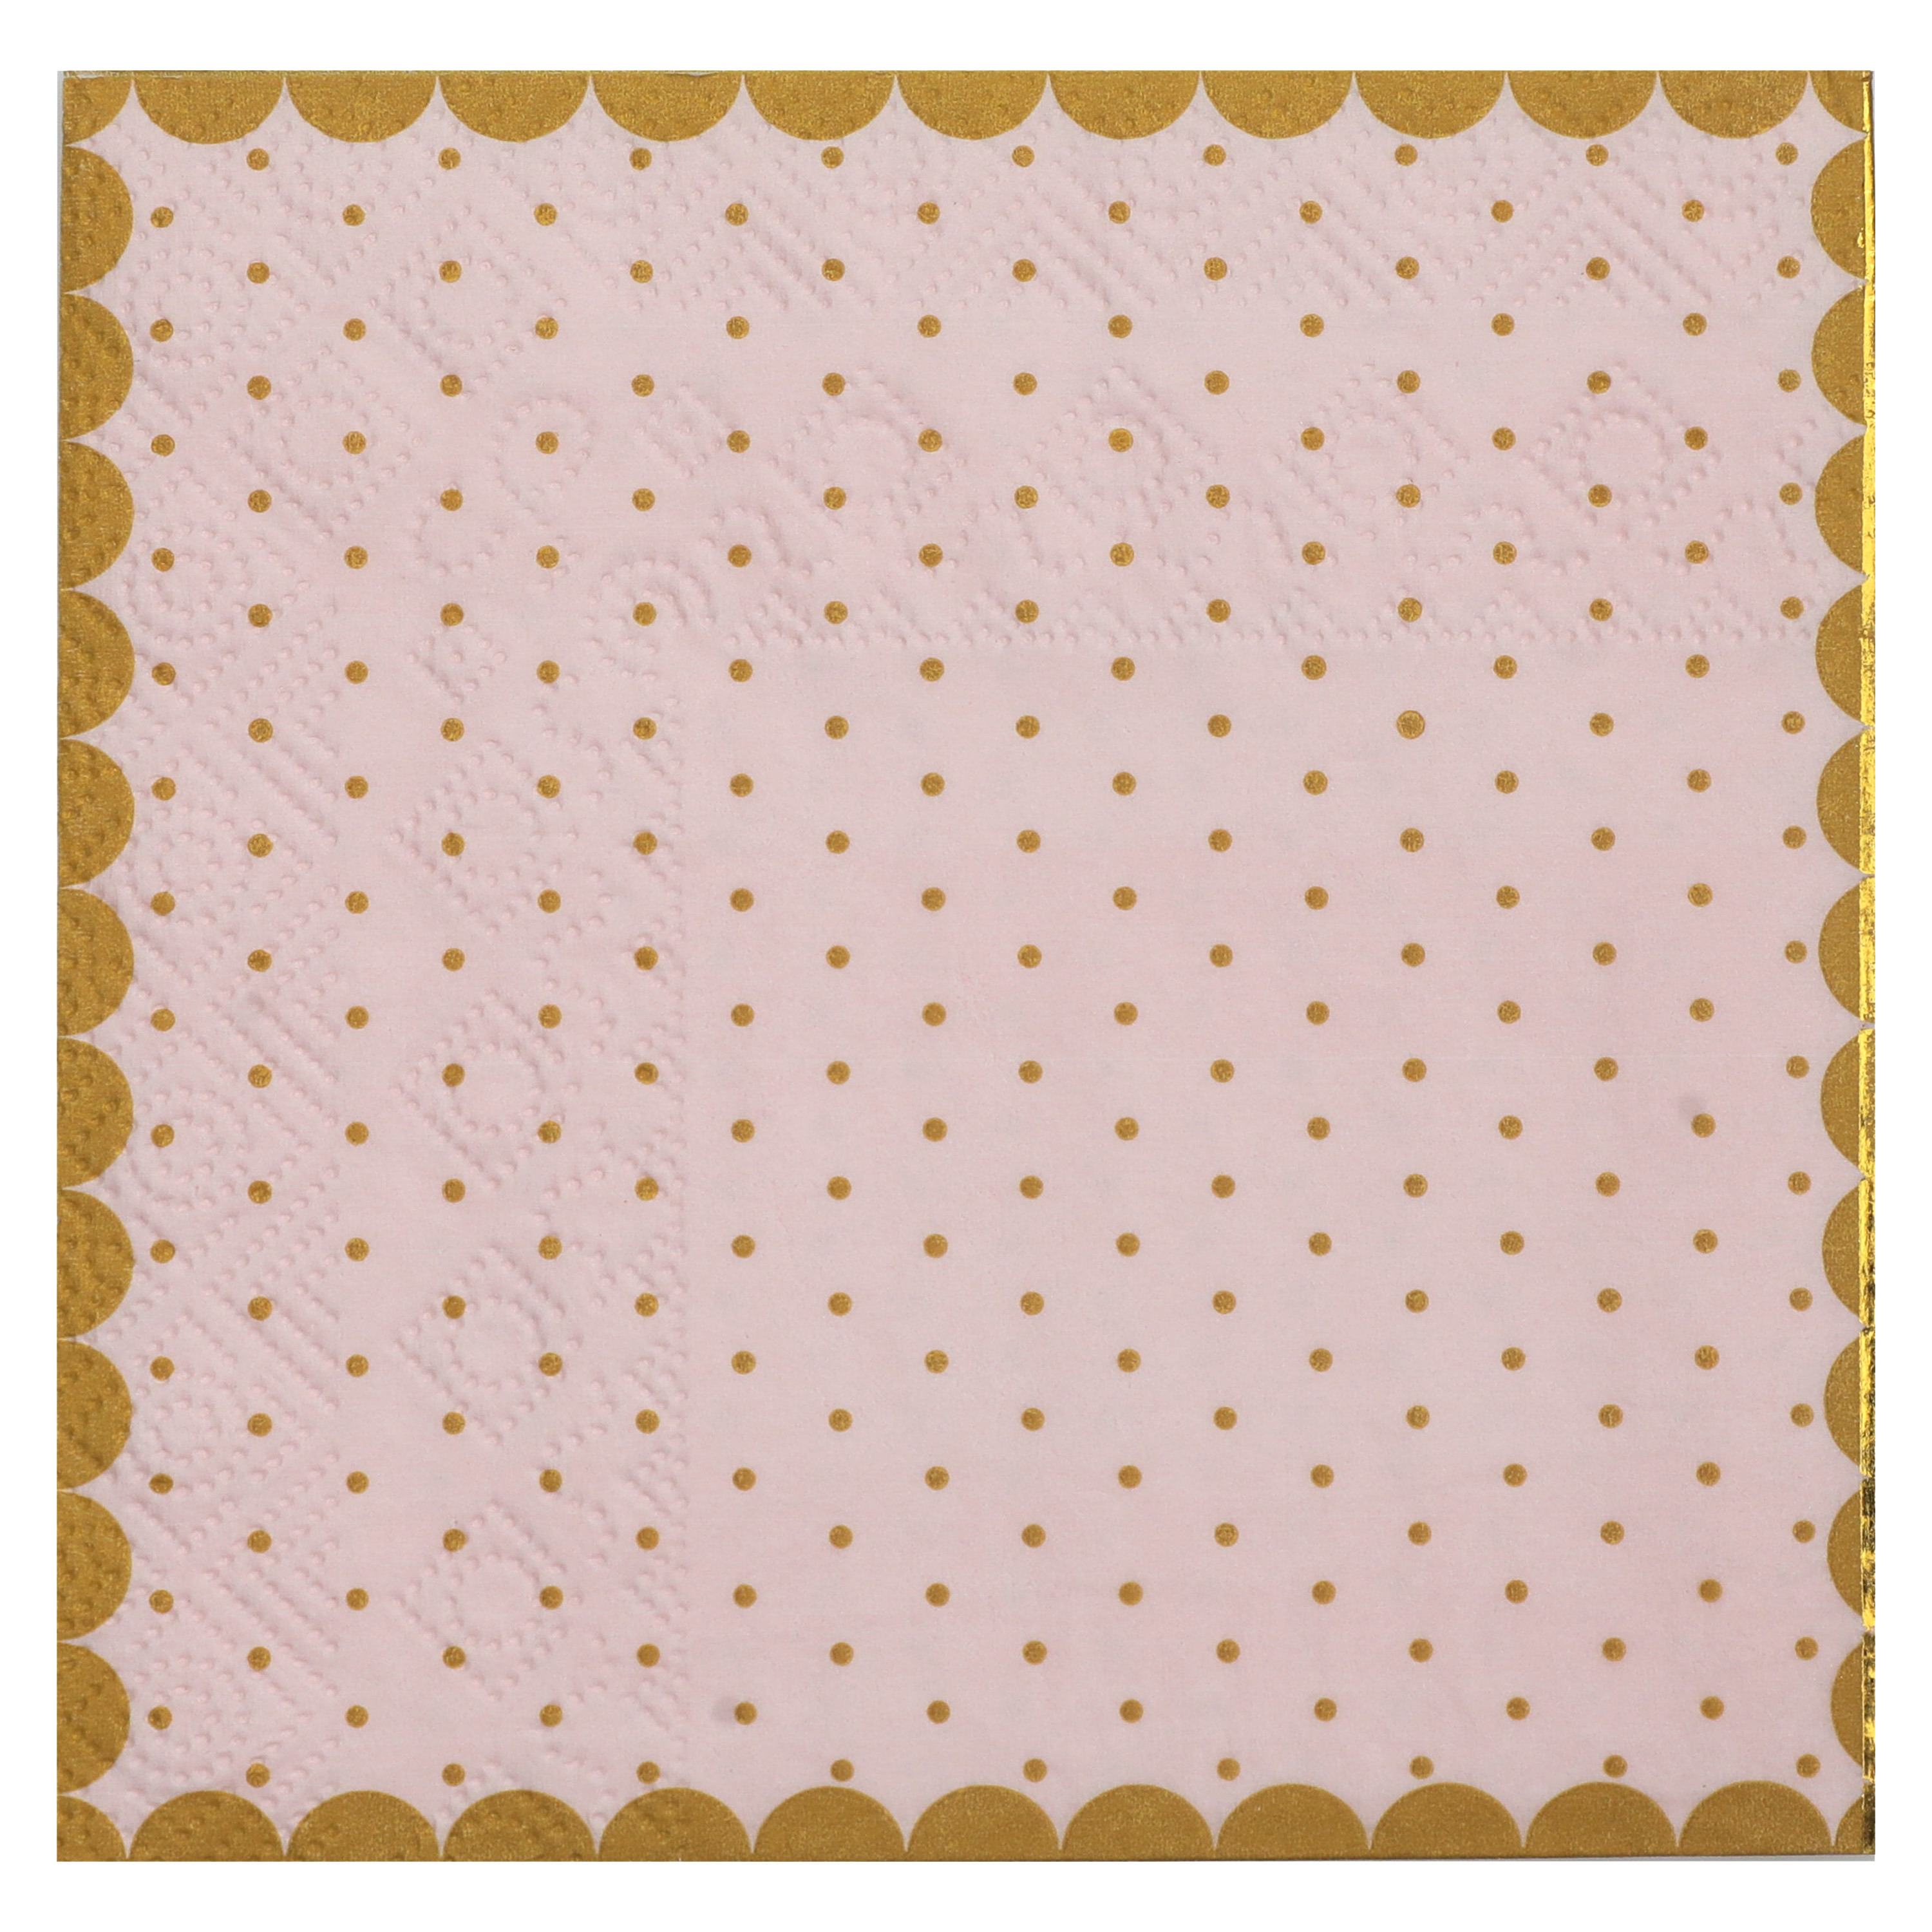 Feest servetten - stippen - 20x stuks - 25 x 25 cm - papier - roze/goud